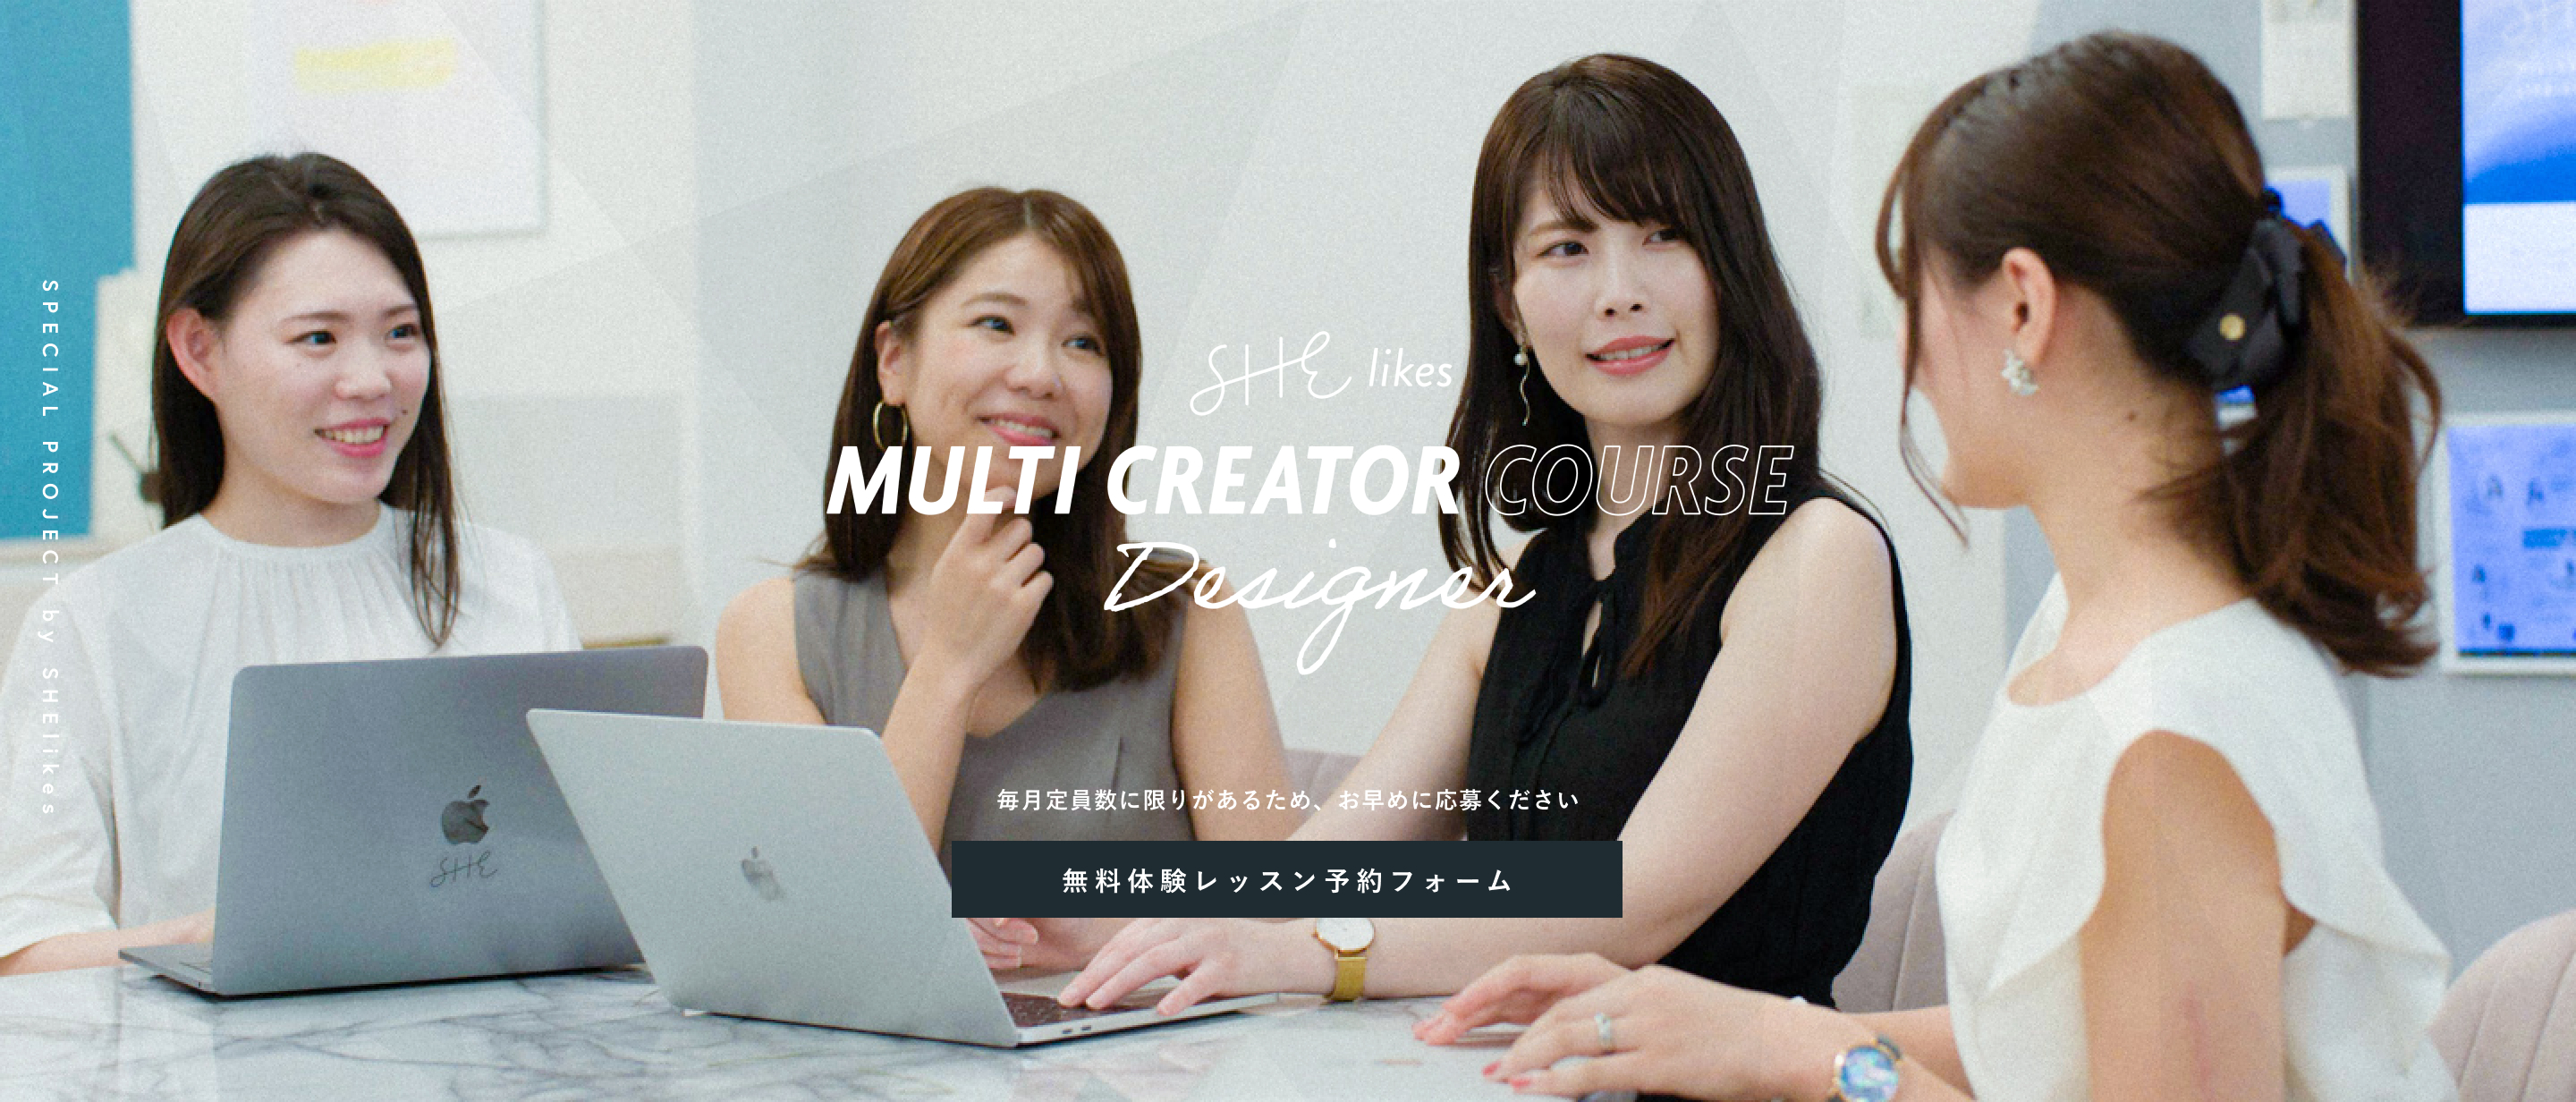 SHE likes MUTI CREATOR COURSE DESIGNER 無料体験レッスン予約フォーム